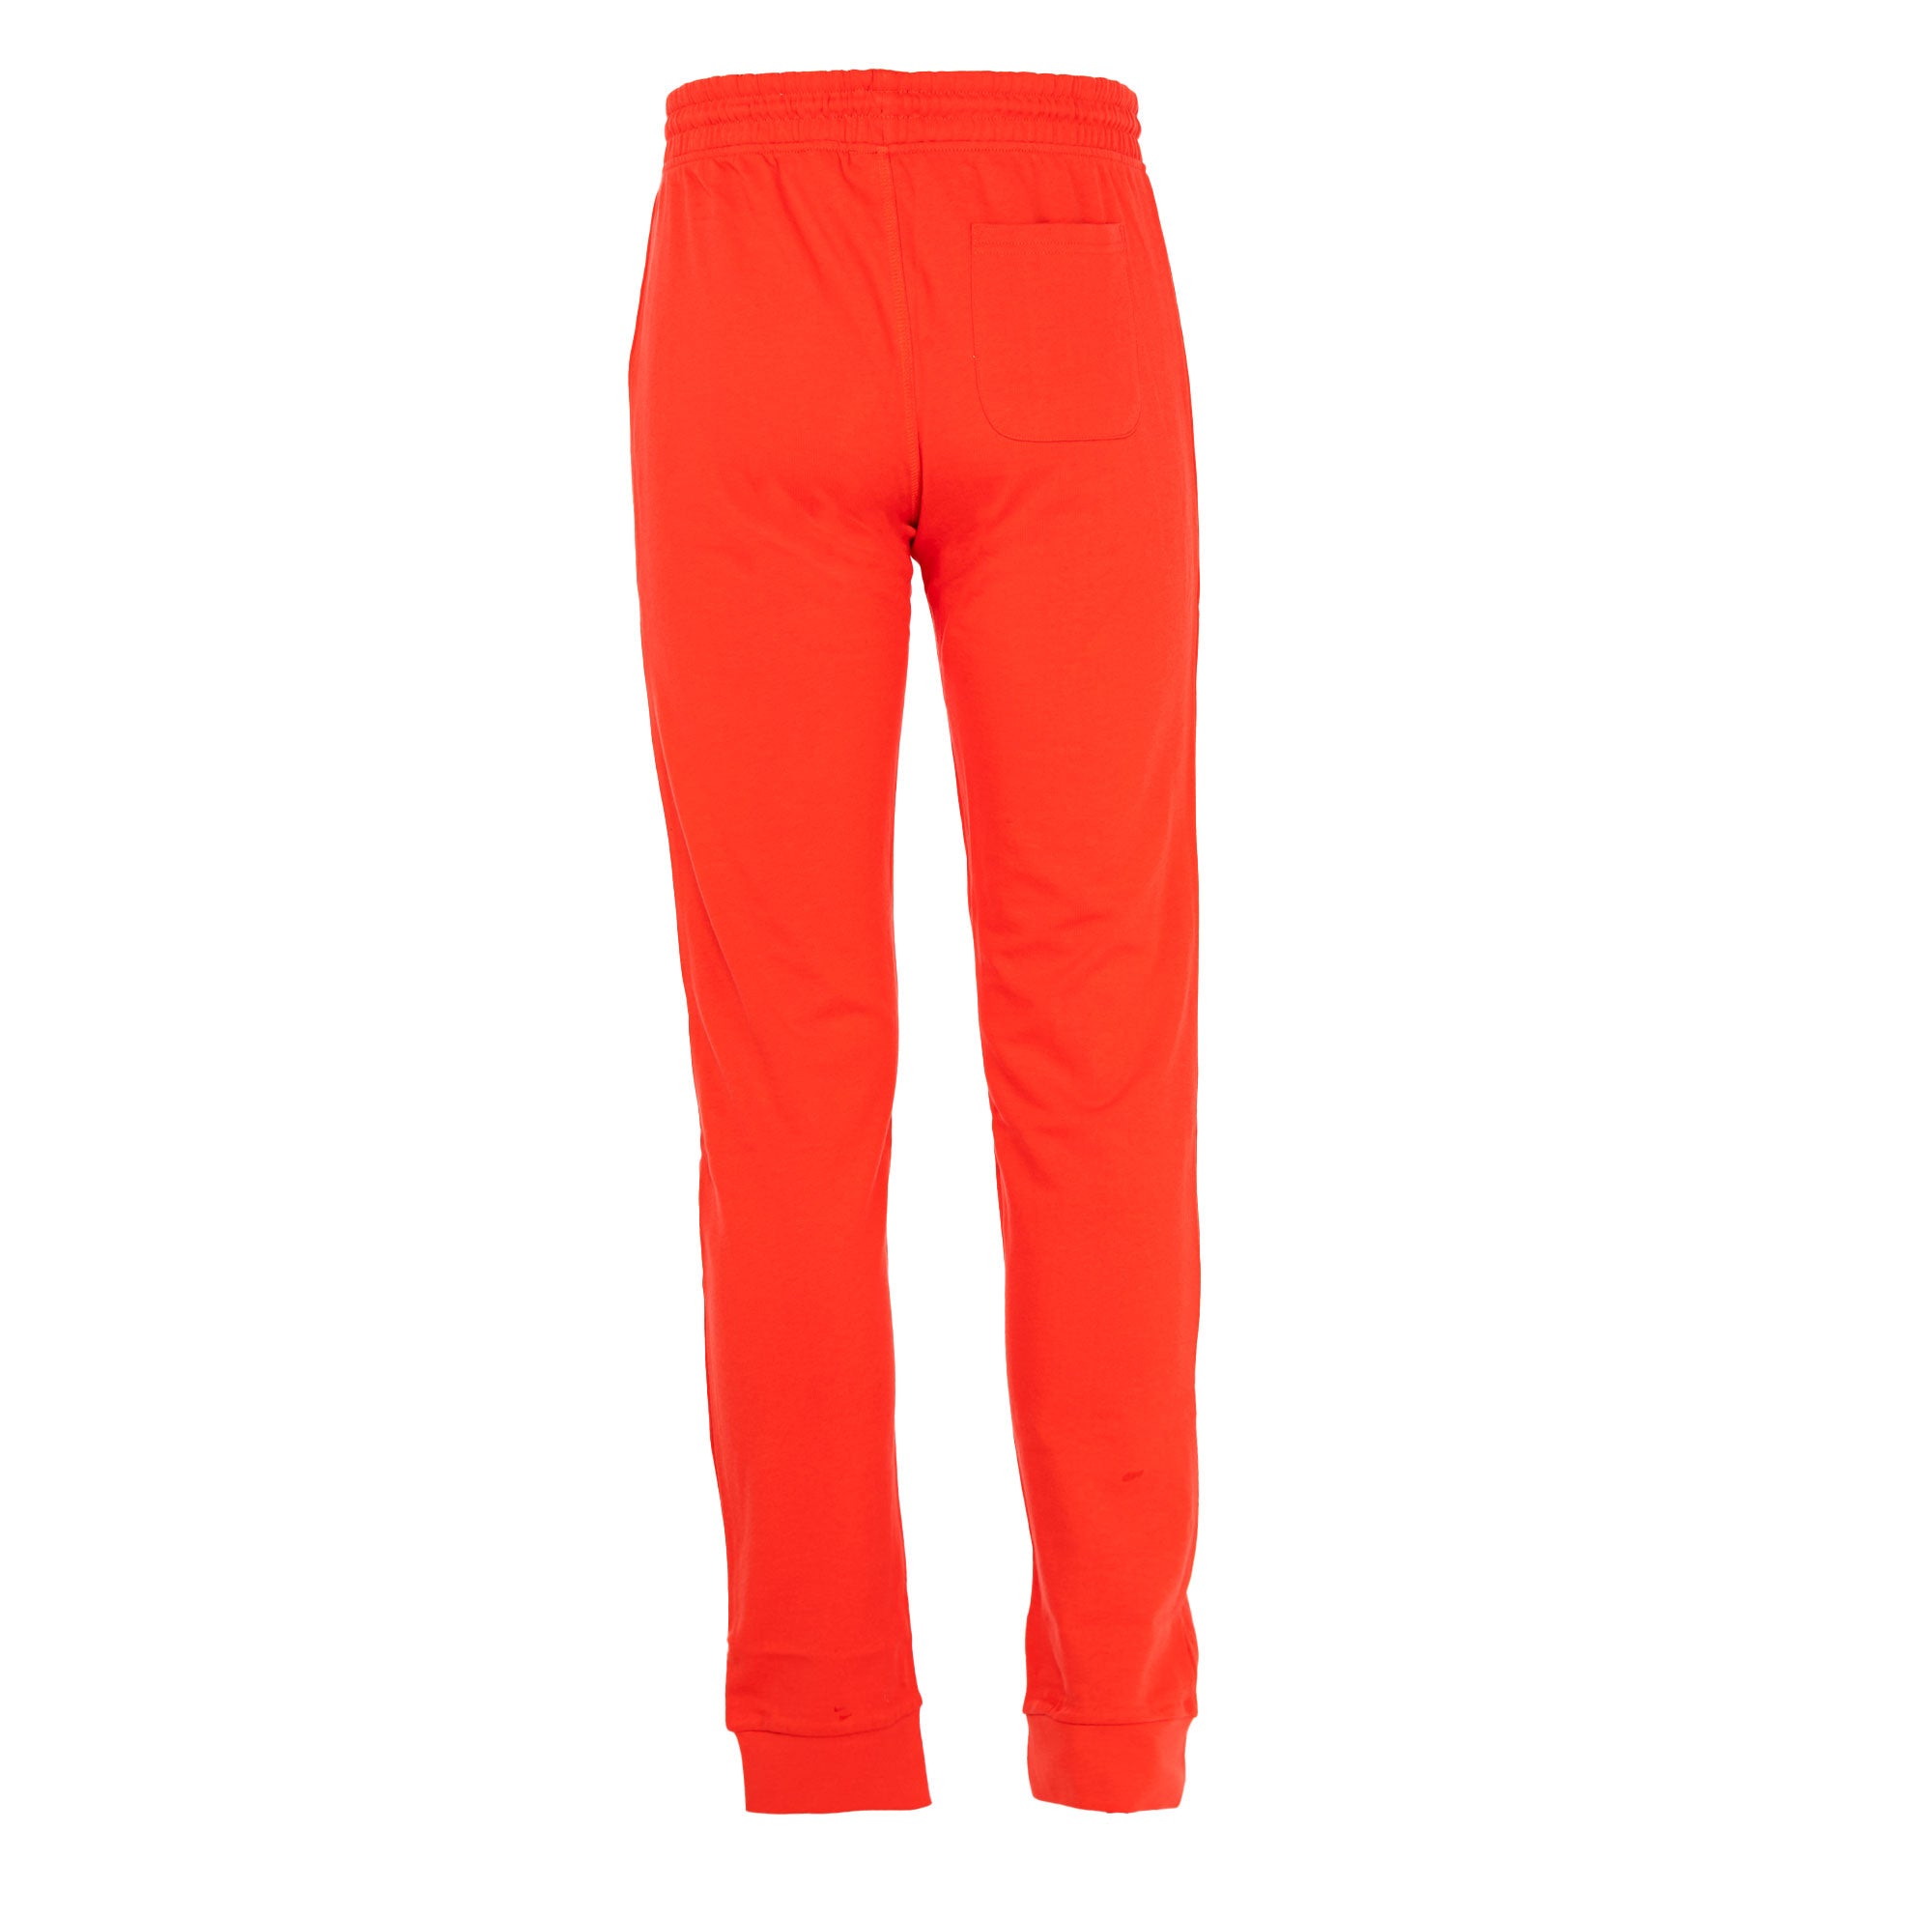 U.S. POLO ASSN. | Pantalone Bambino arancione | 51568